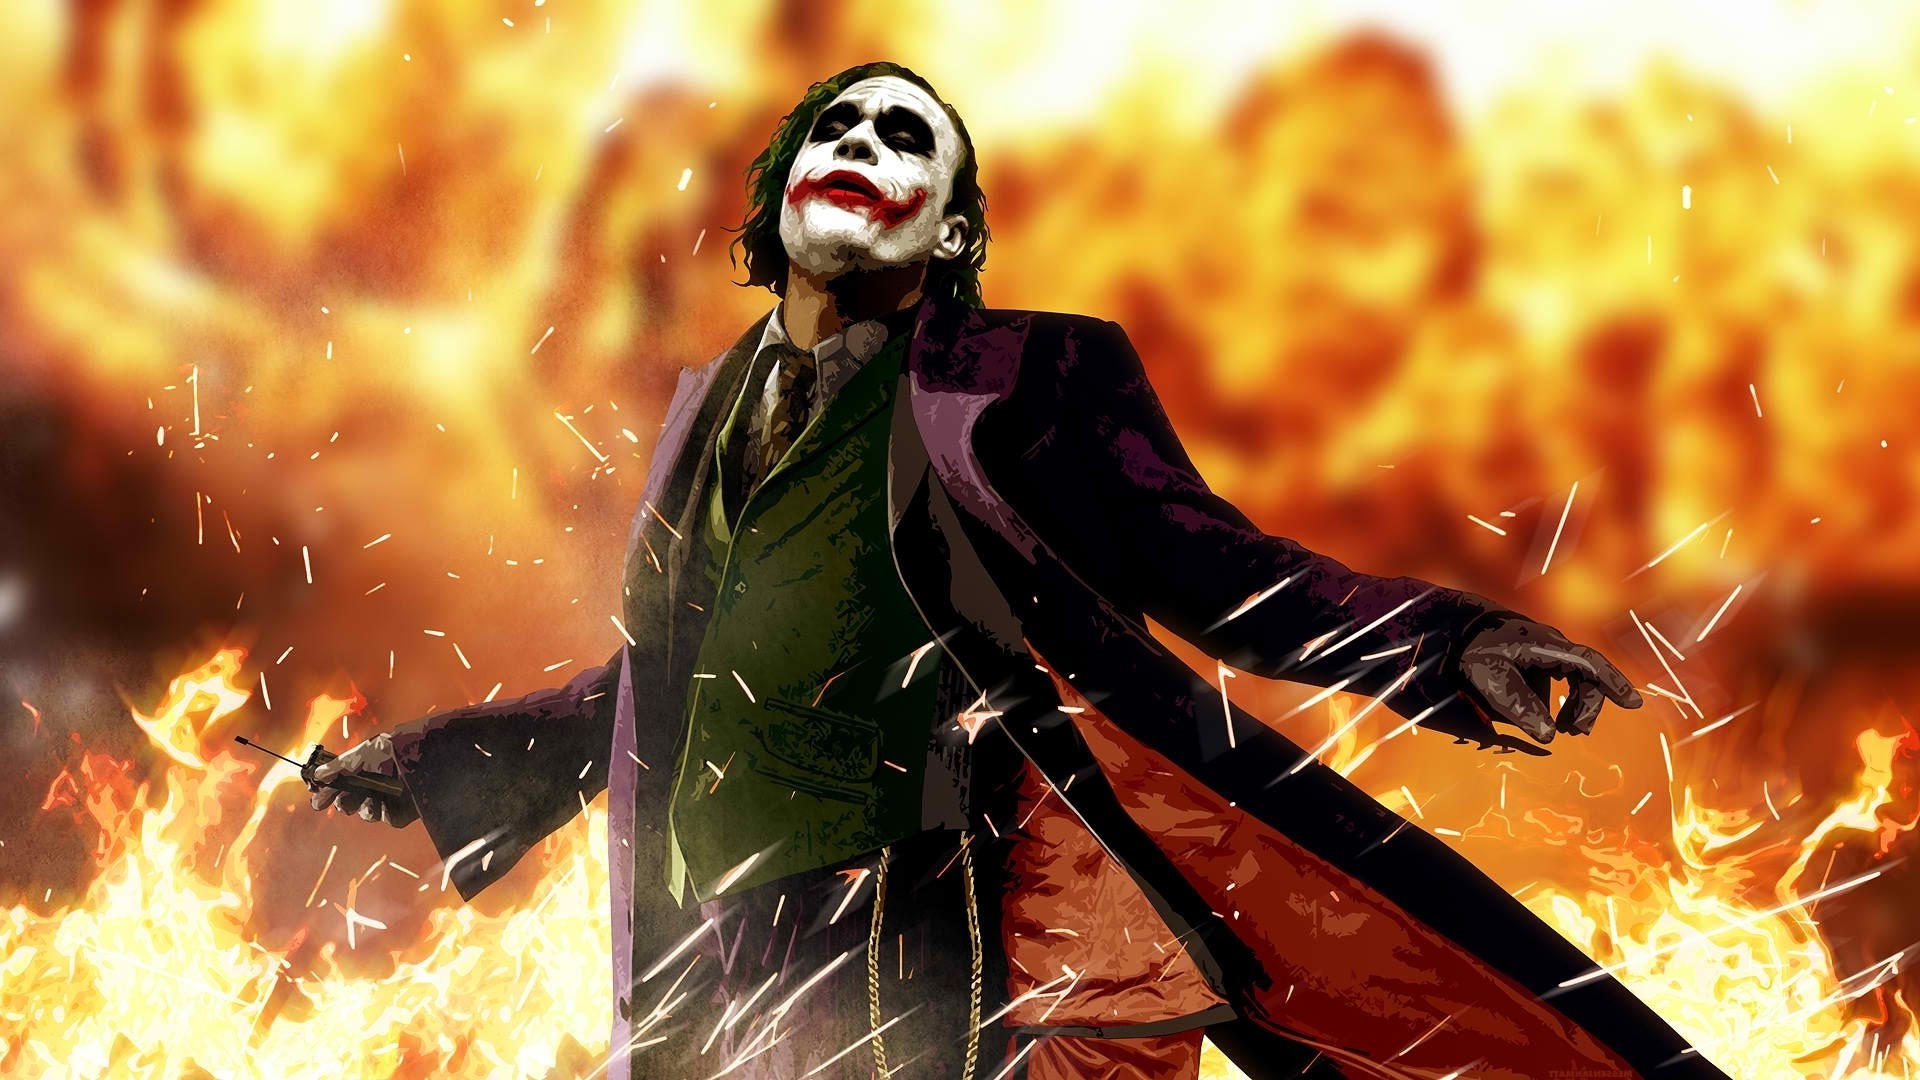 34 Top Images Joker Free Movie Full Hd / @!FREE: Joker Full Movie Online 2019 Free Watch & Download ...